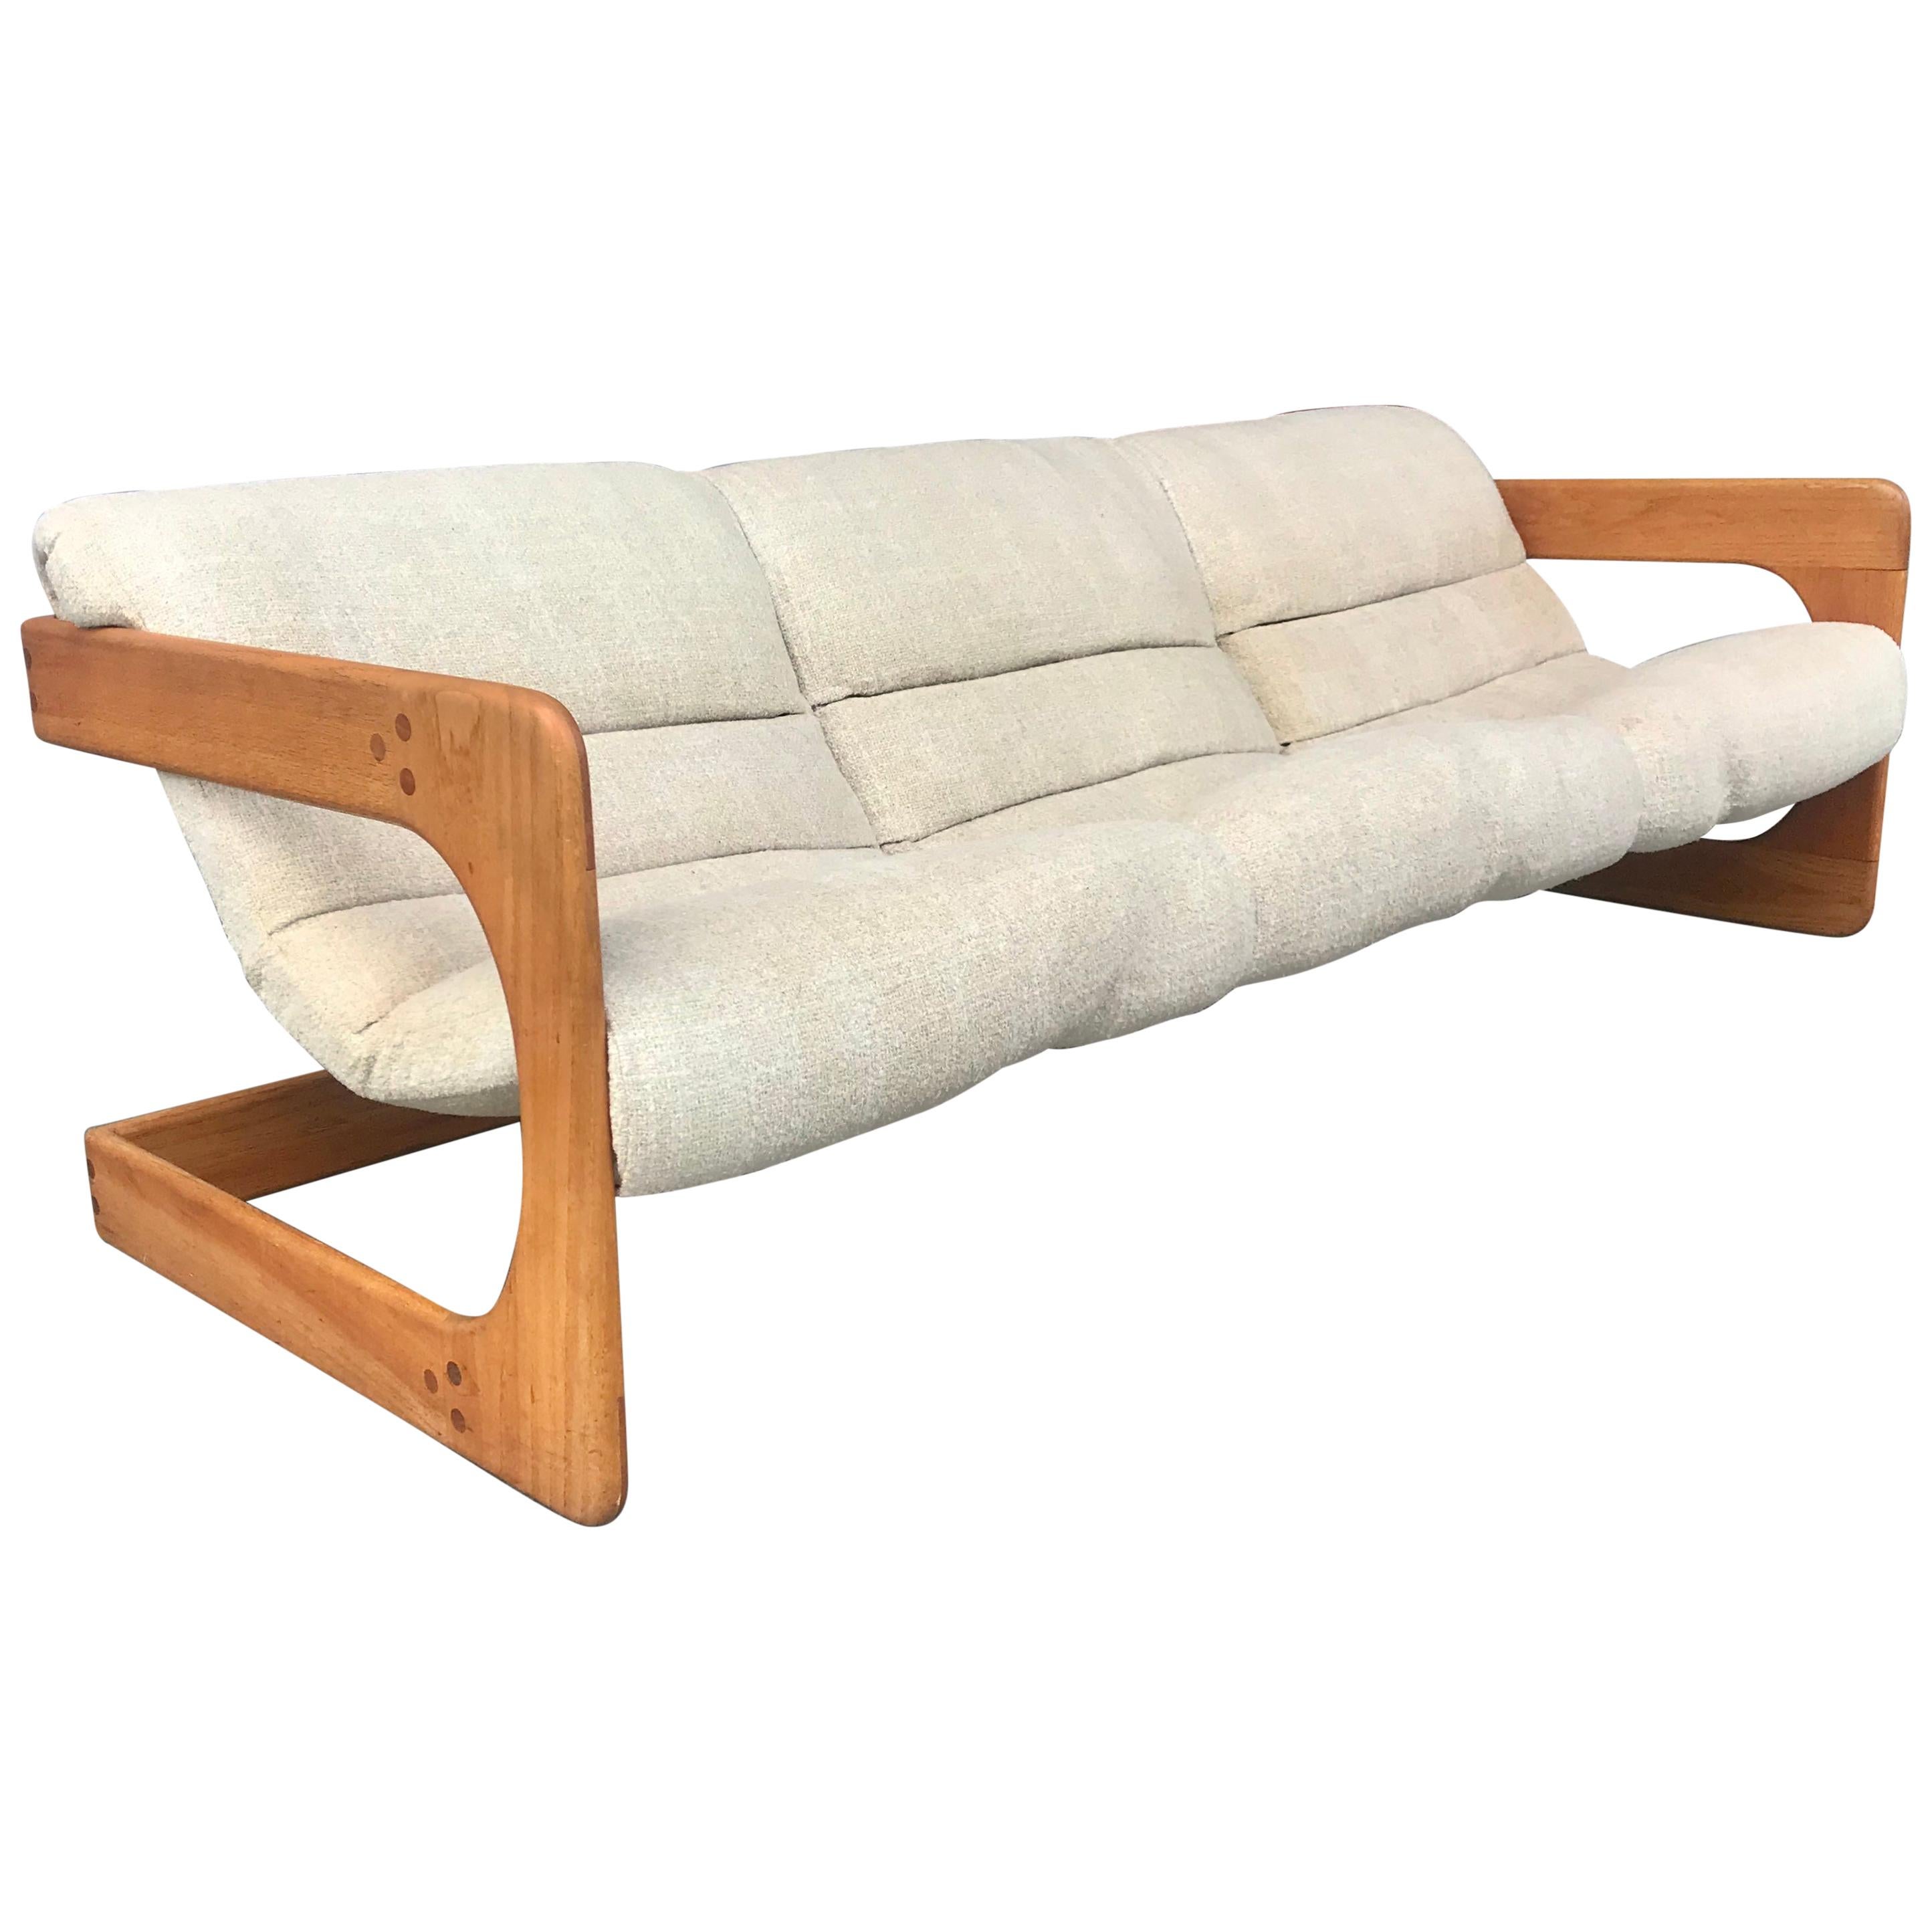 Rare 3-Seat Sofa Designed by Lou Hodges, California Design Group 1970 Modernist